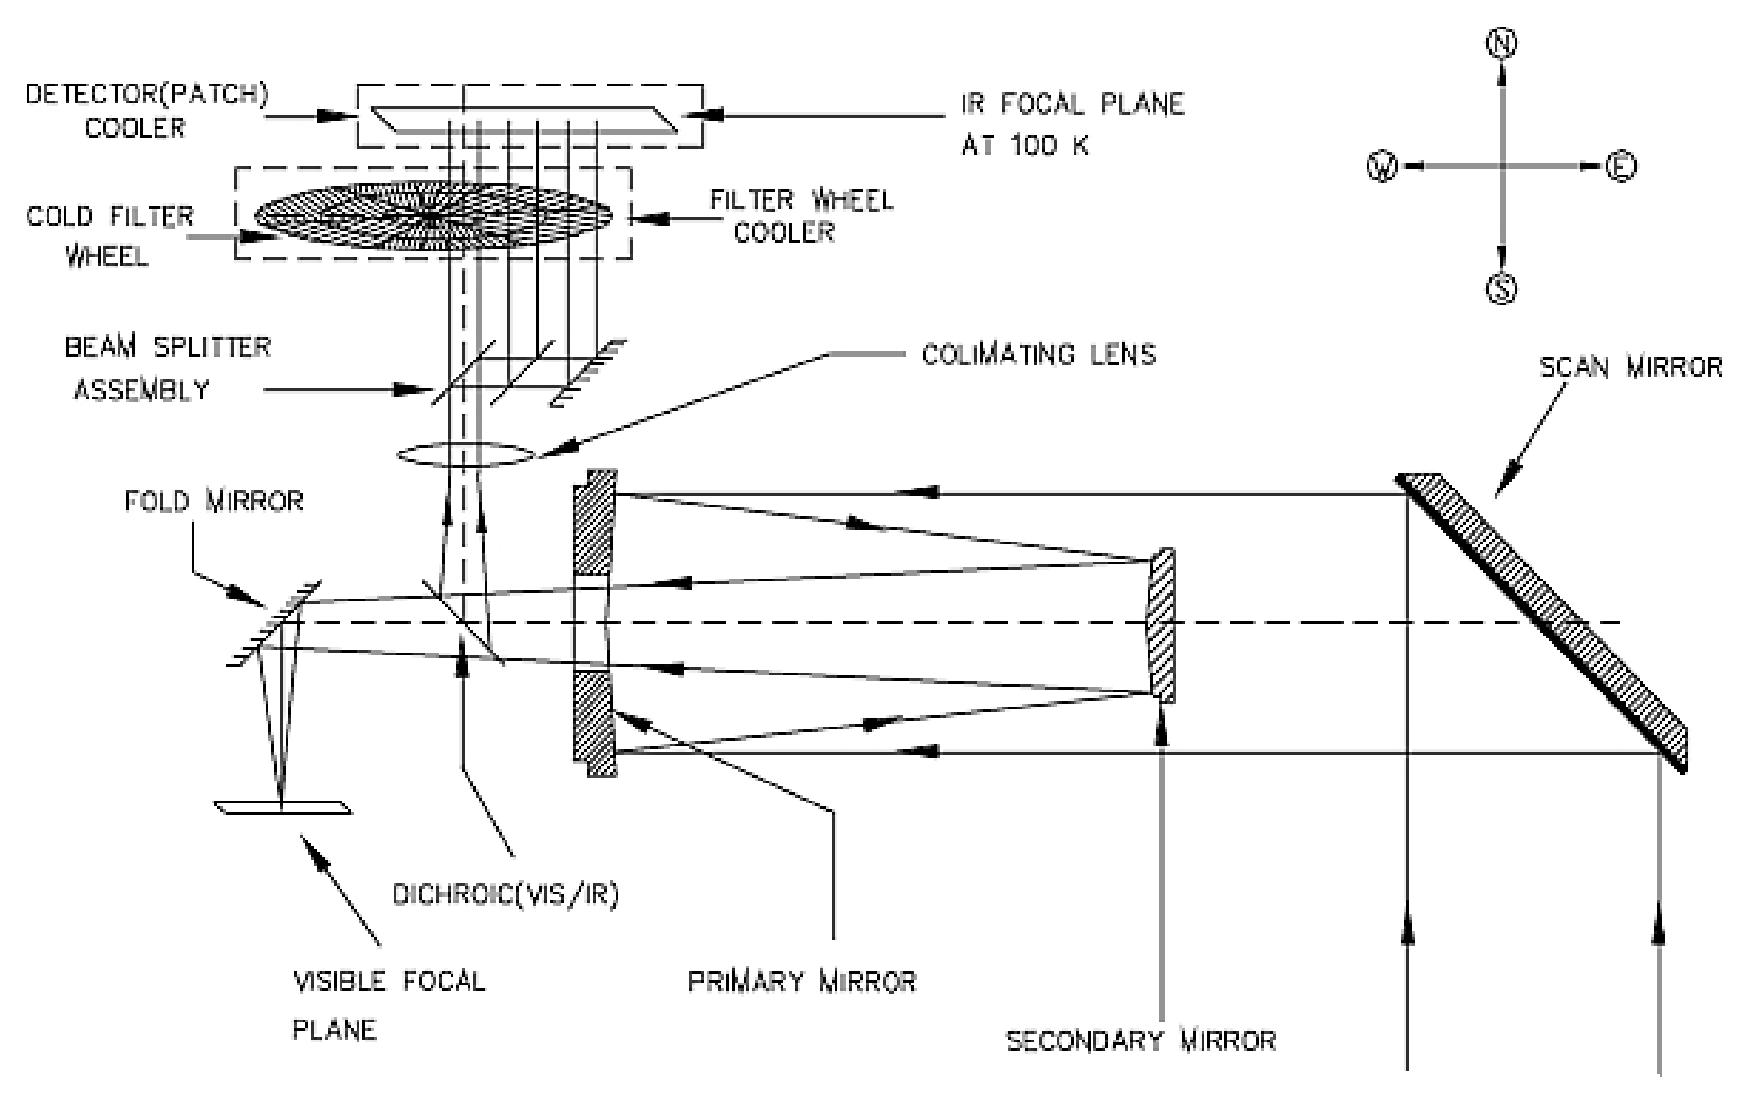 Figure 12: Block diagram of the Sounder optics subsystem (image credit: ISRO,Ref. 12)